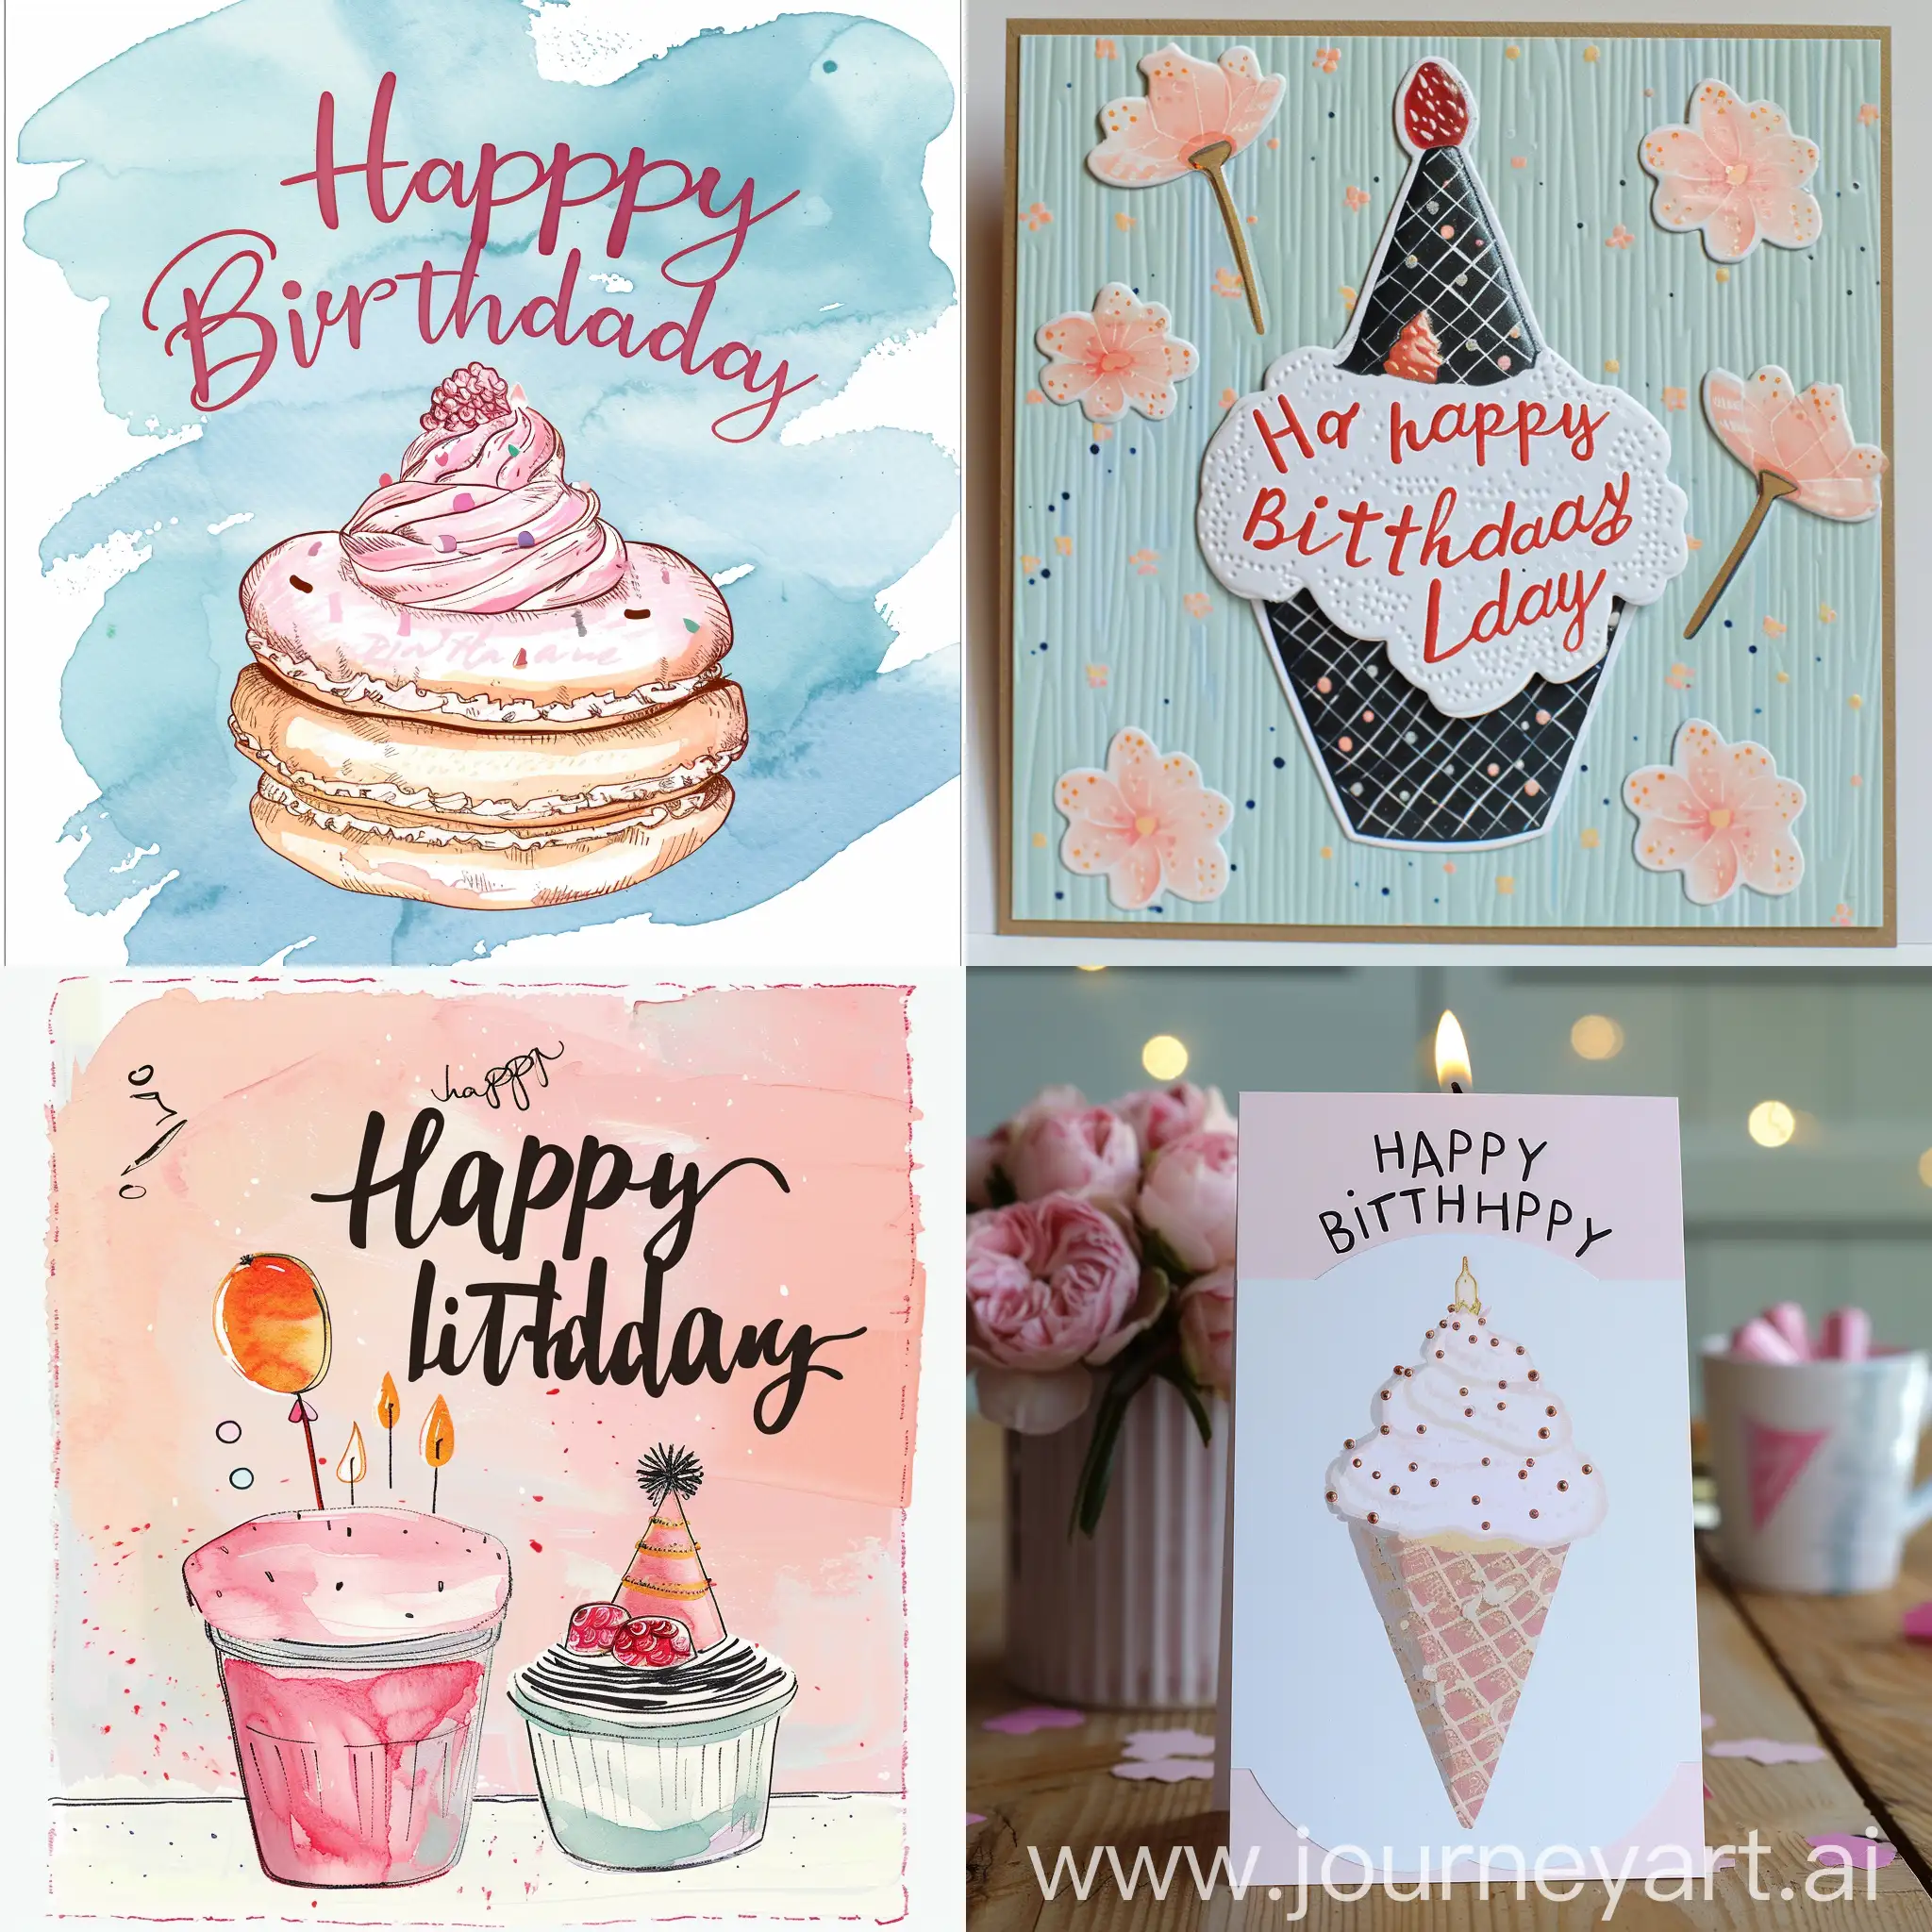 Adorable-Happy-Birthday-Card-featuring-Lauren-and-a-Cute-Mini-Dachshund